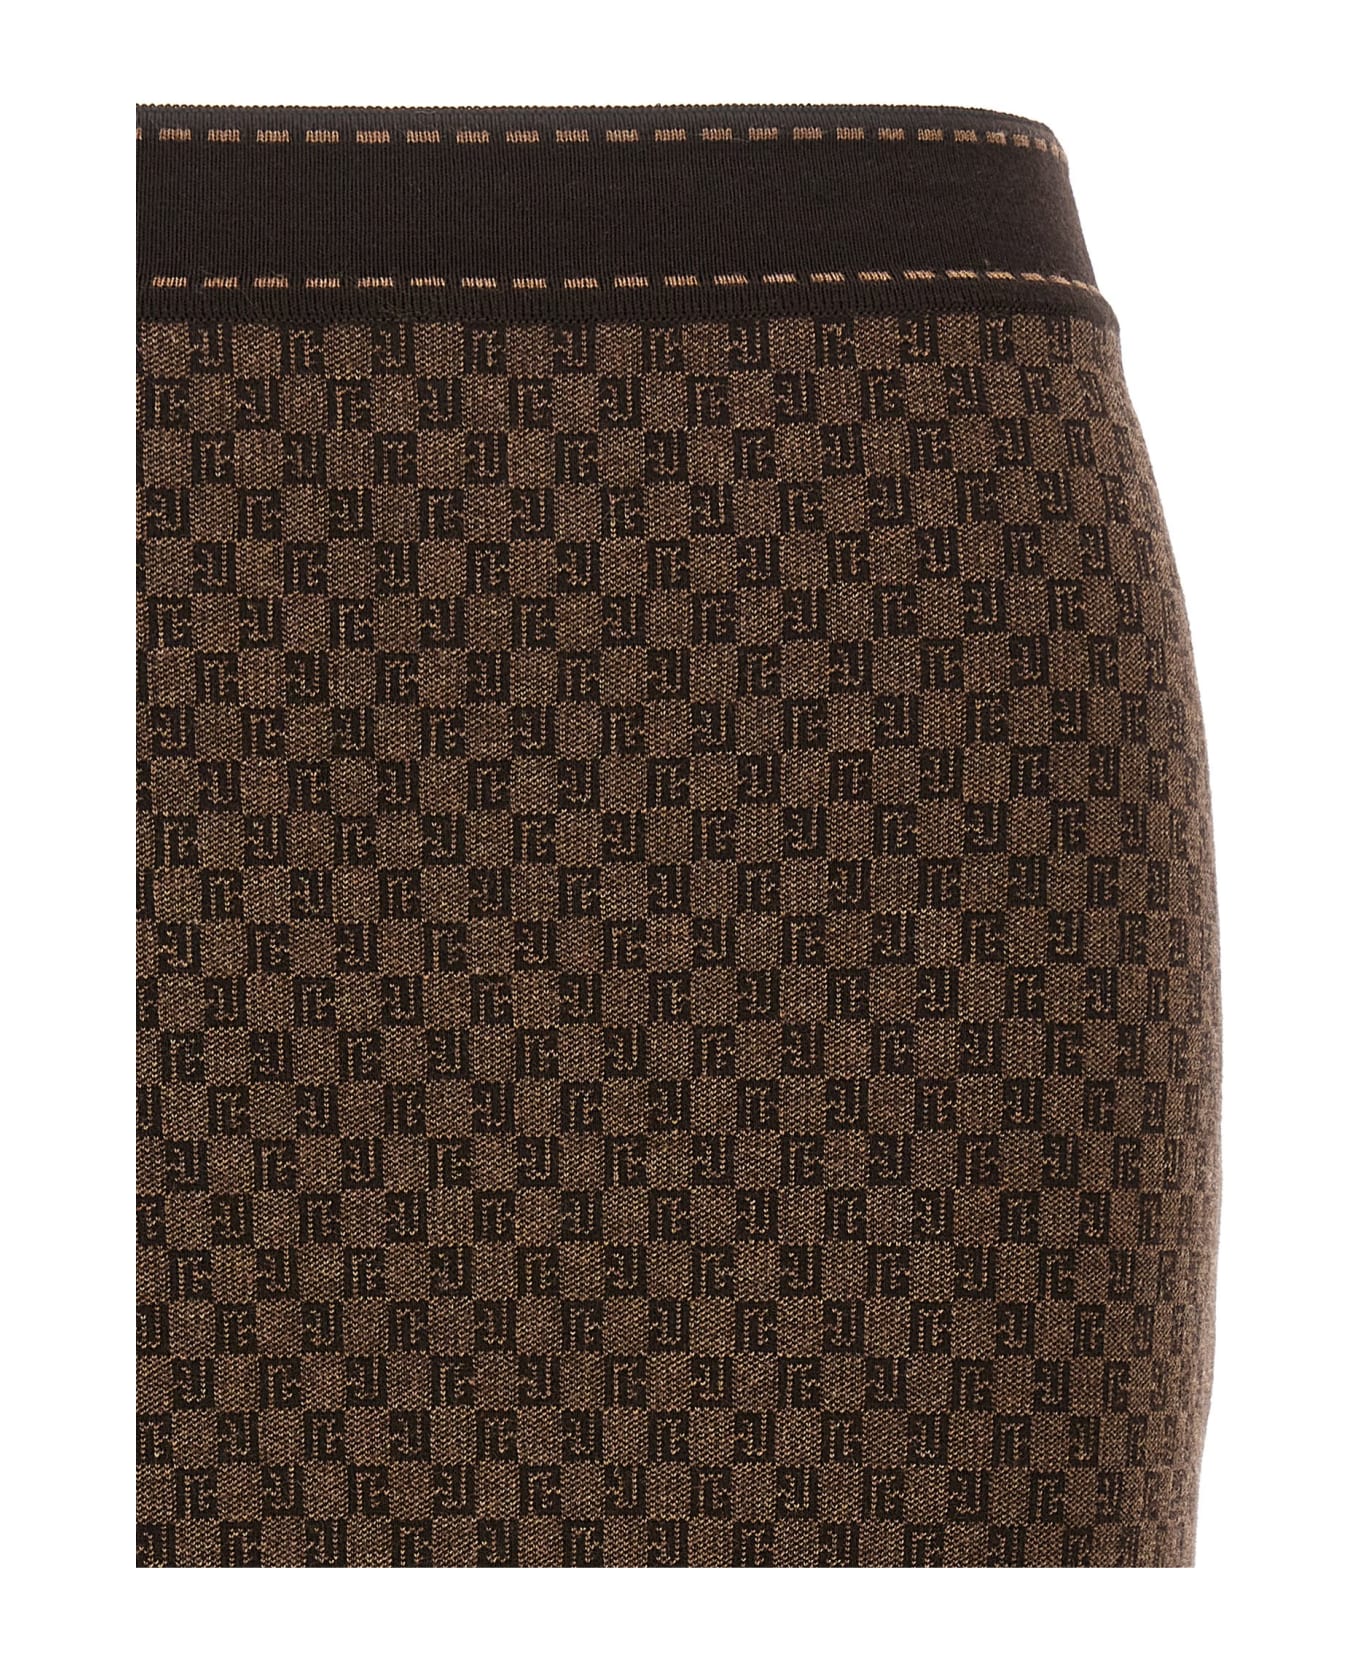 Balmain Monogram Miniskirt - Wfp Marron Marron Fonce スカート